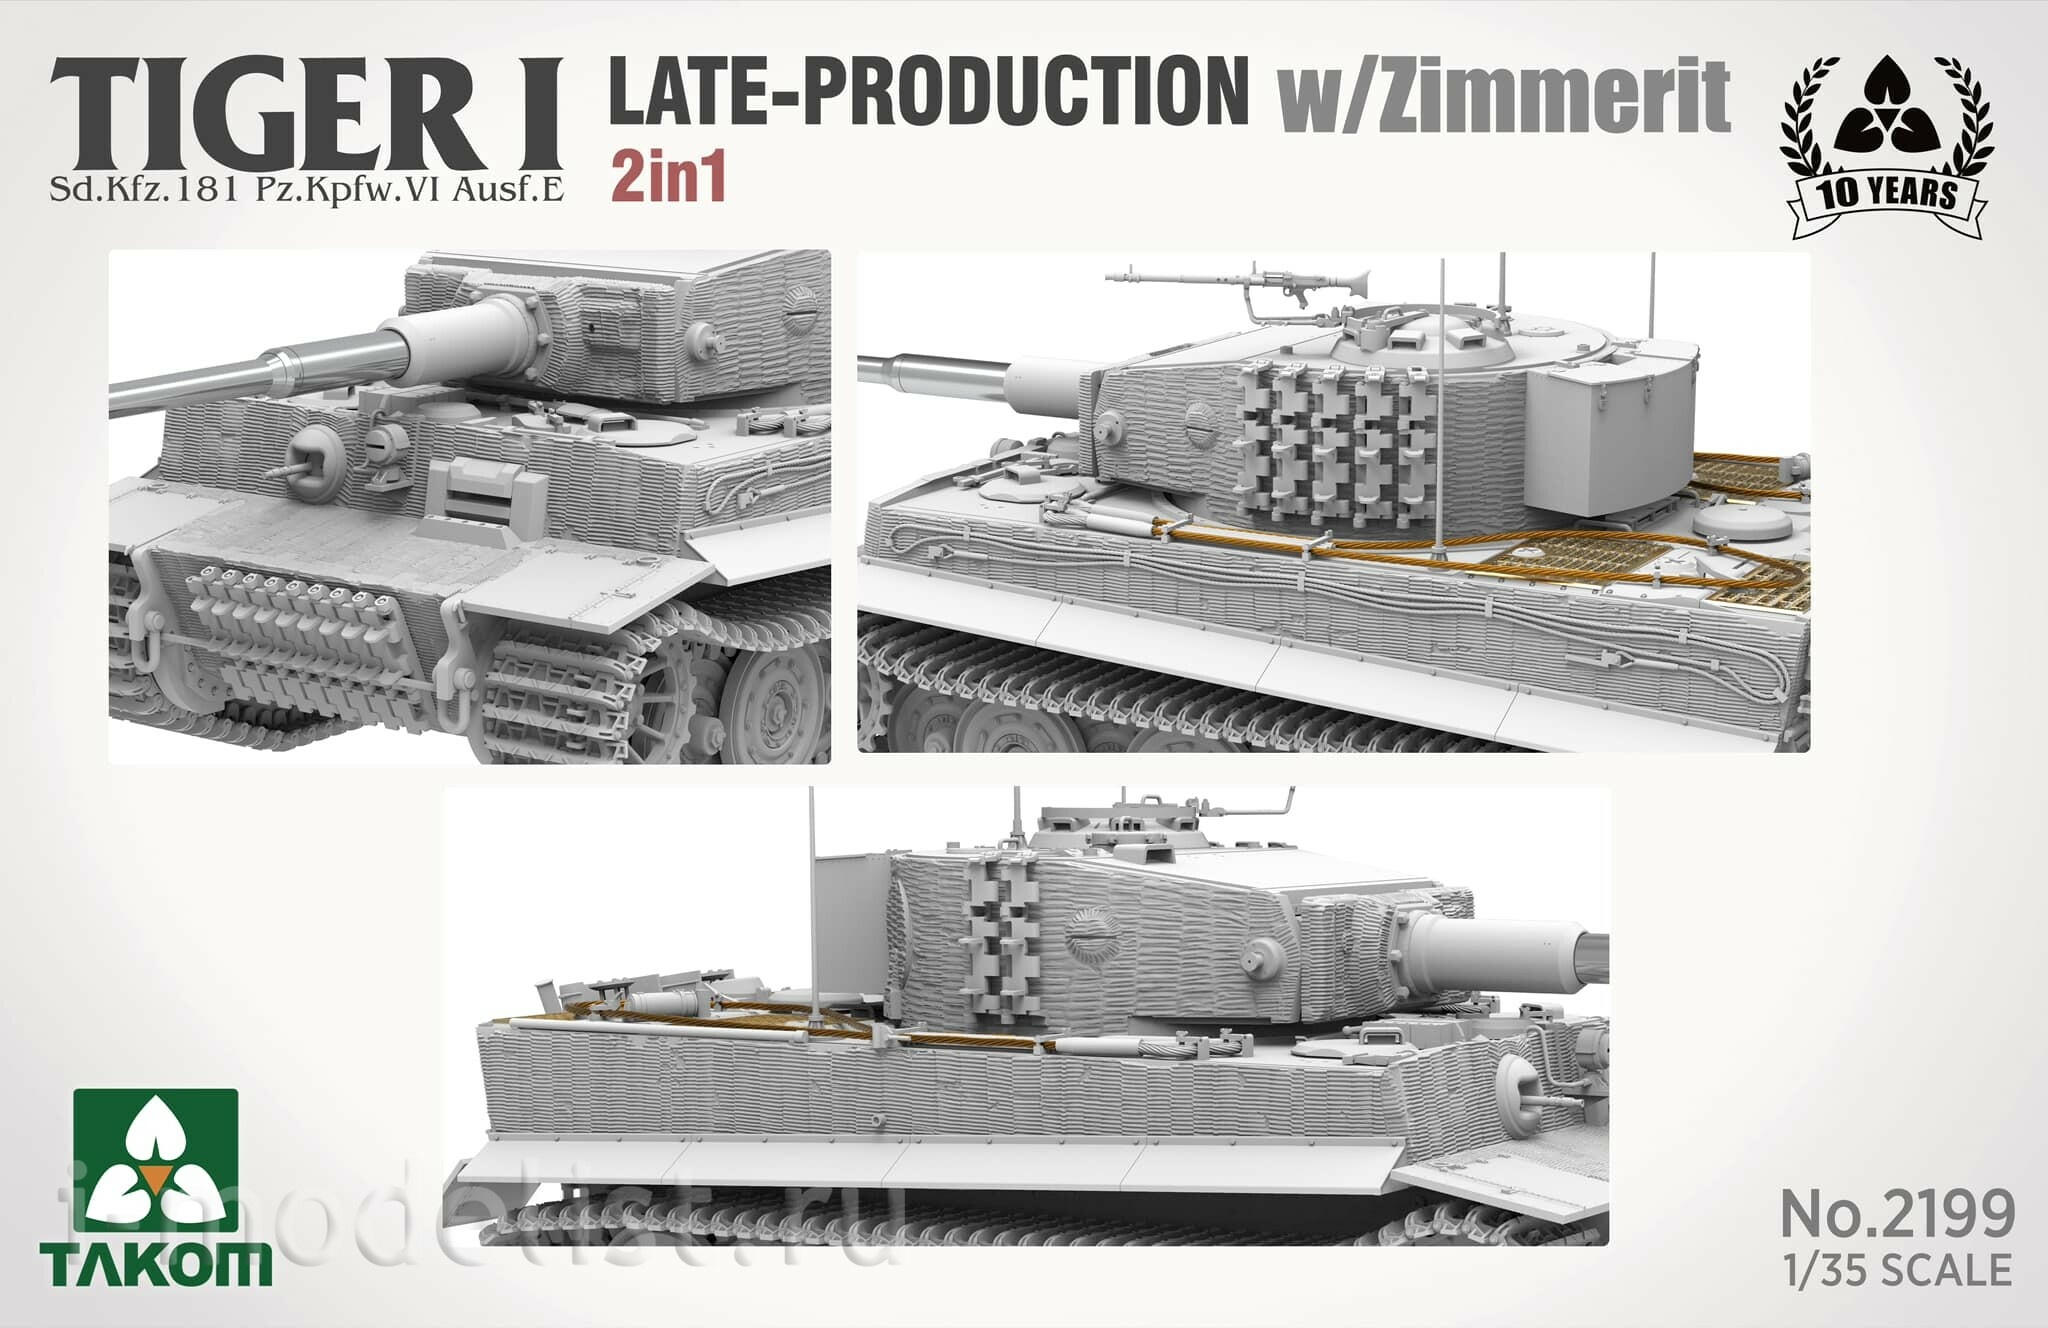 2199 Takom 1/35 Немецкий тяжёлый танк Sd.Kfz. 181 Pz. Kpfw VI Ausf.E Tiger I (поздний) с Zimmerit